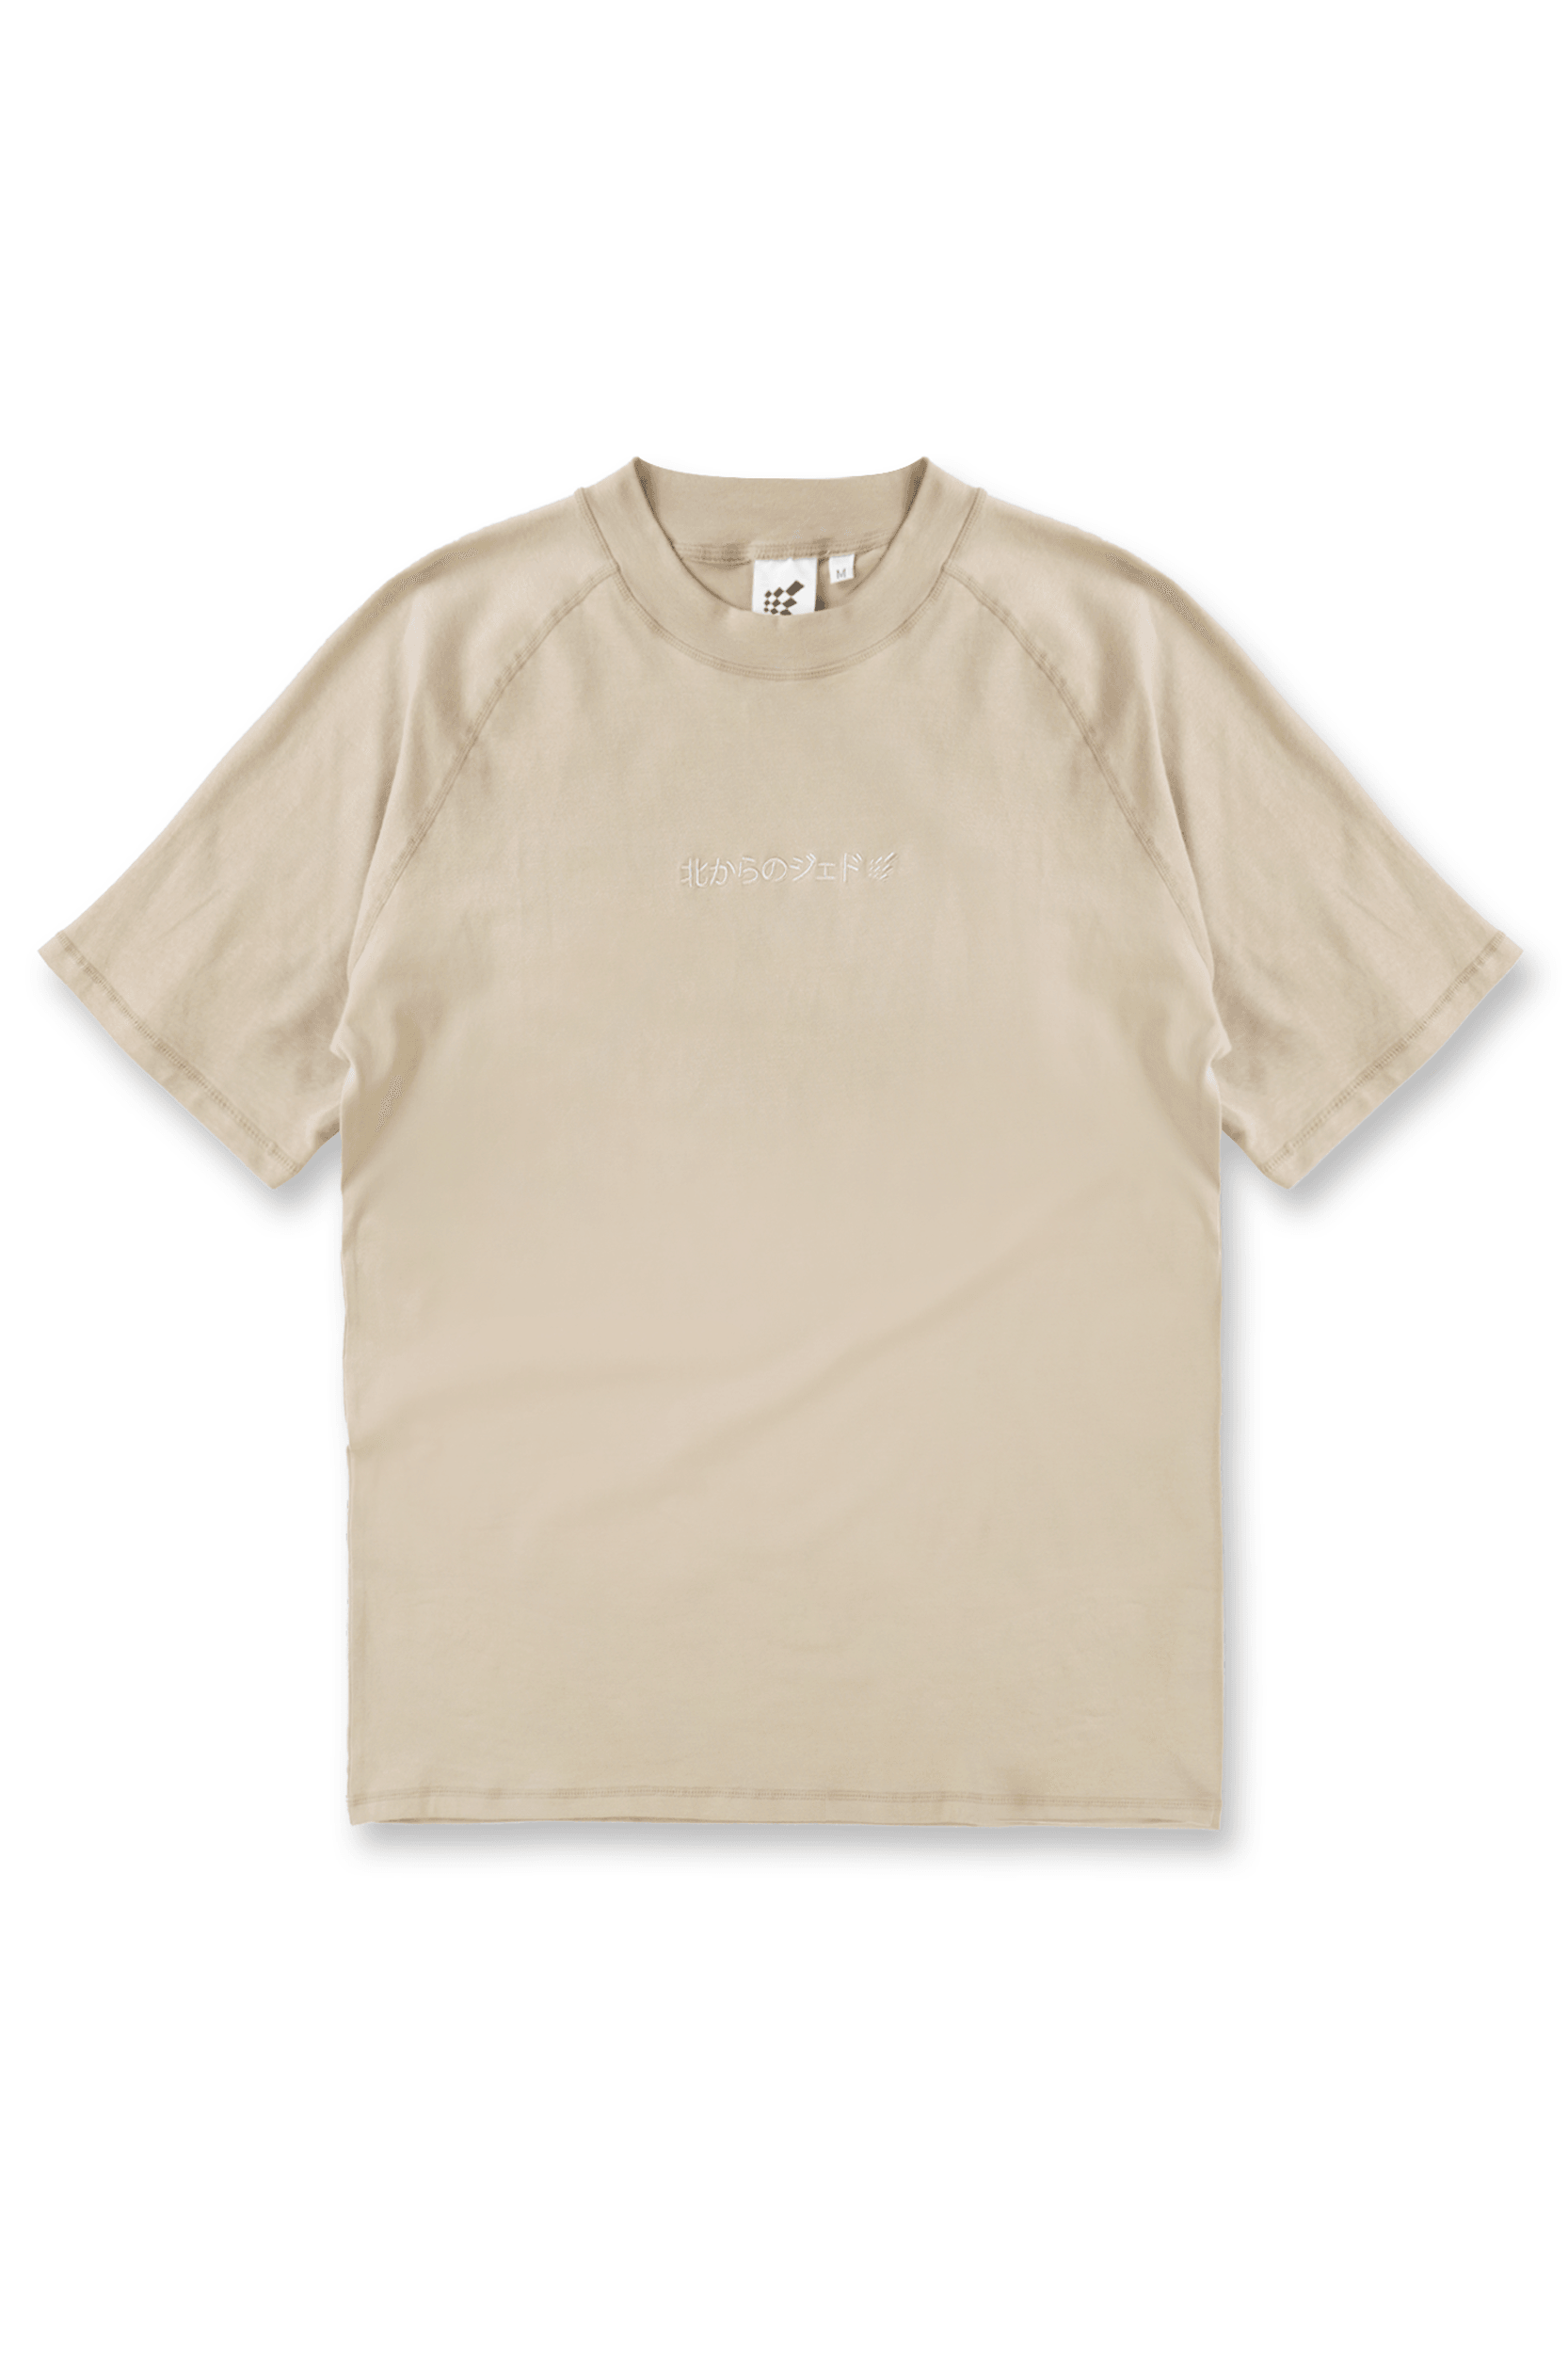 Luxury Edition Oversized Stretch T-Shirt - Khaki - Jed North